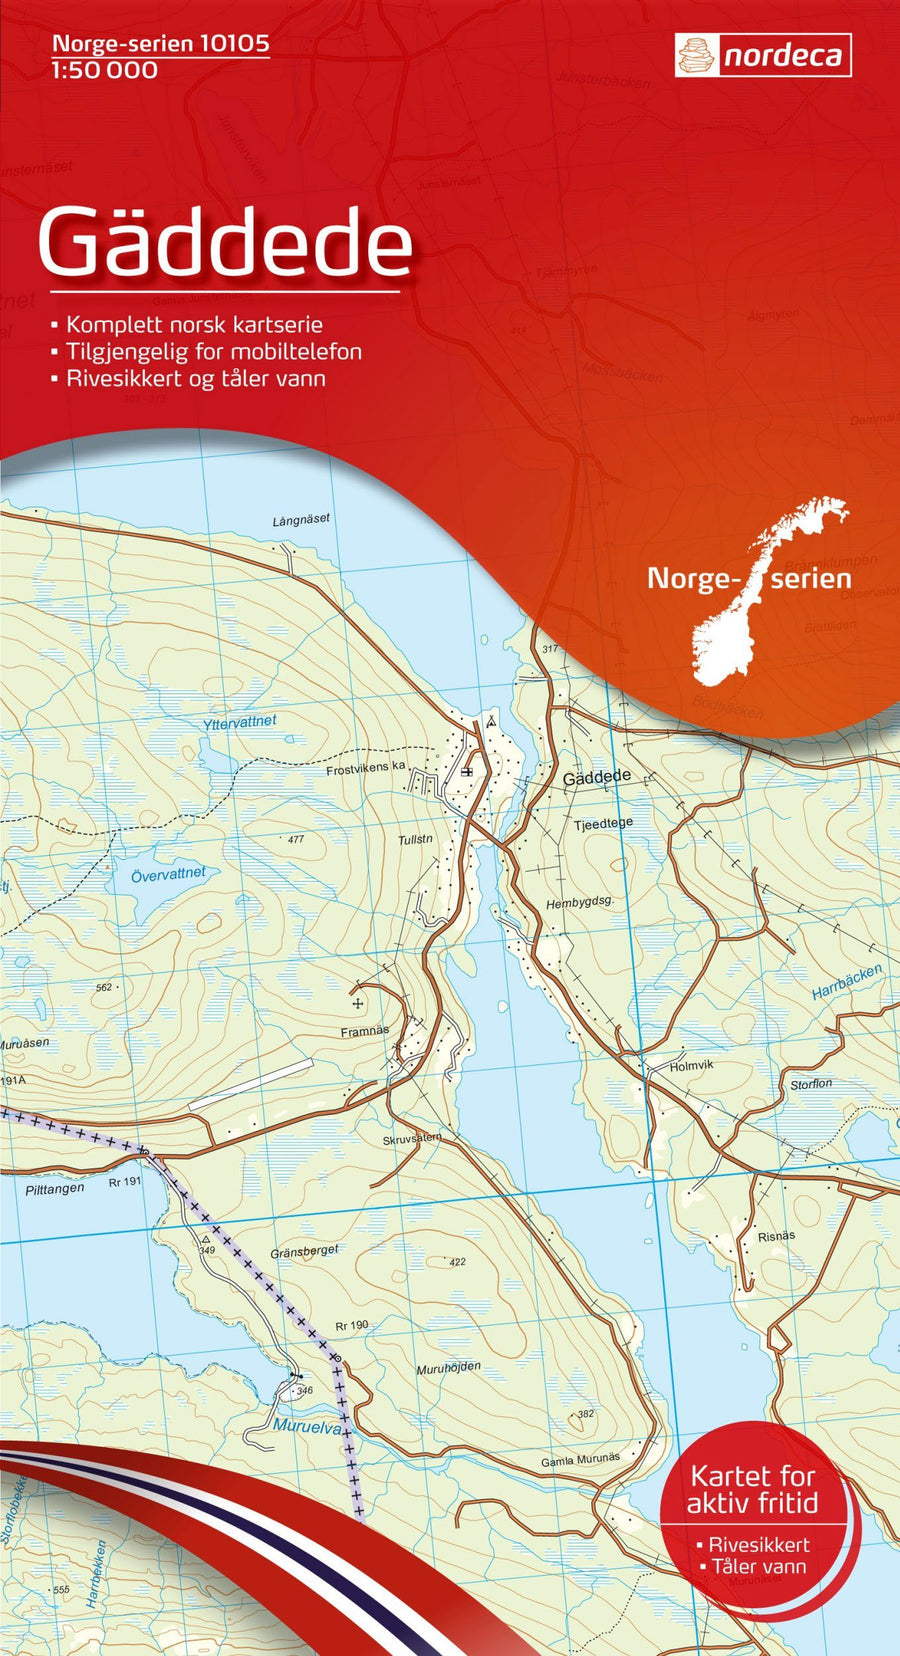 Carte de randonnée n° 10105 - Gaddede (Norvège) | Nordeca - Norge-serien carte pliée Nordeca 